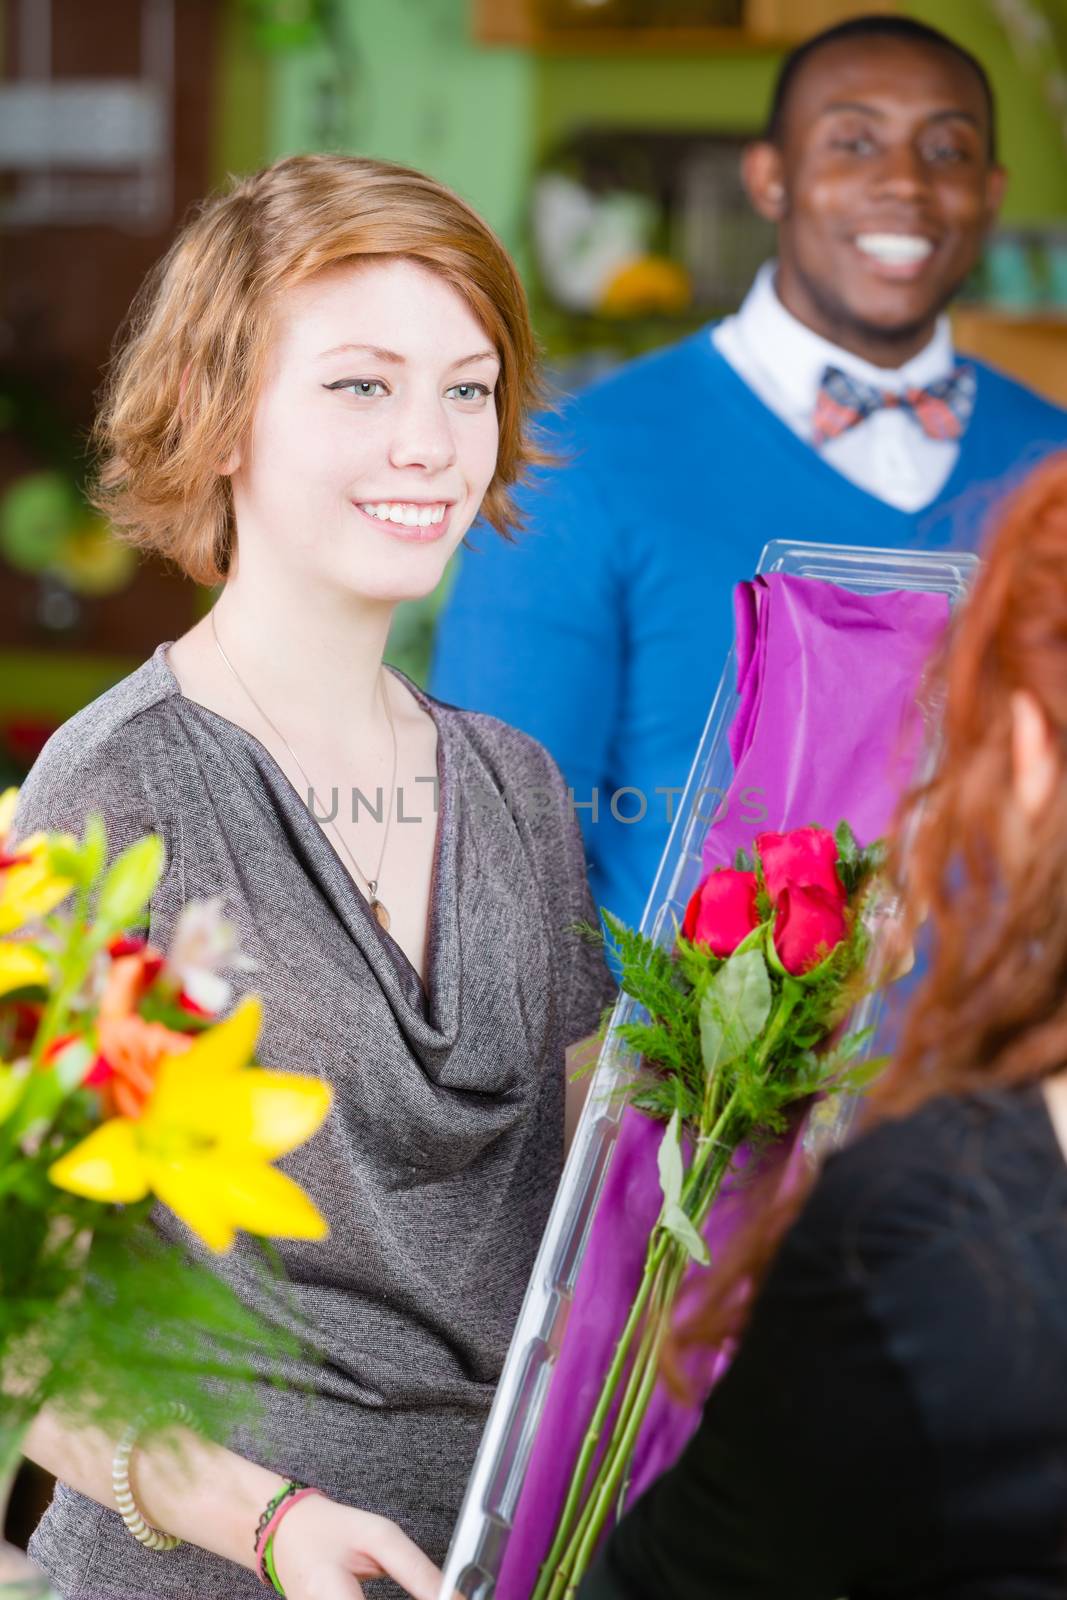 Teen girl purchasing roses at a florist shop